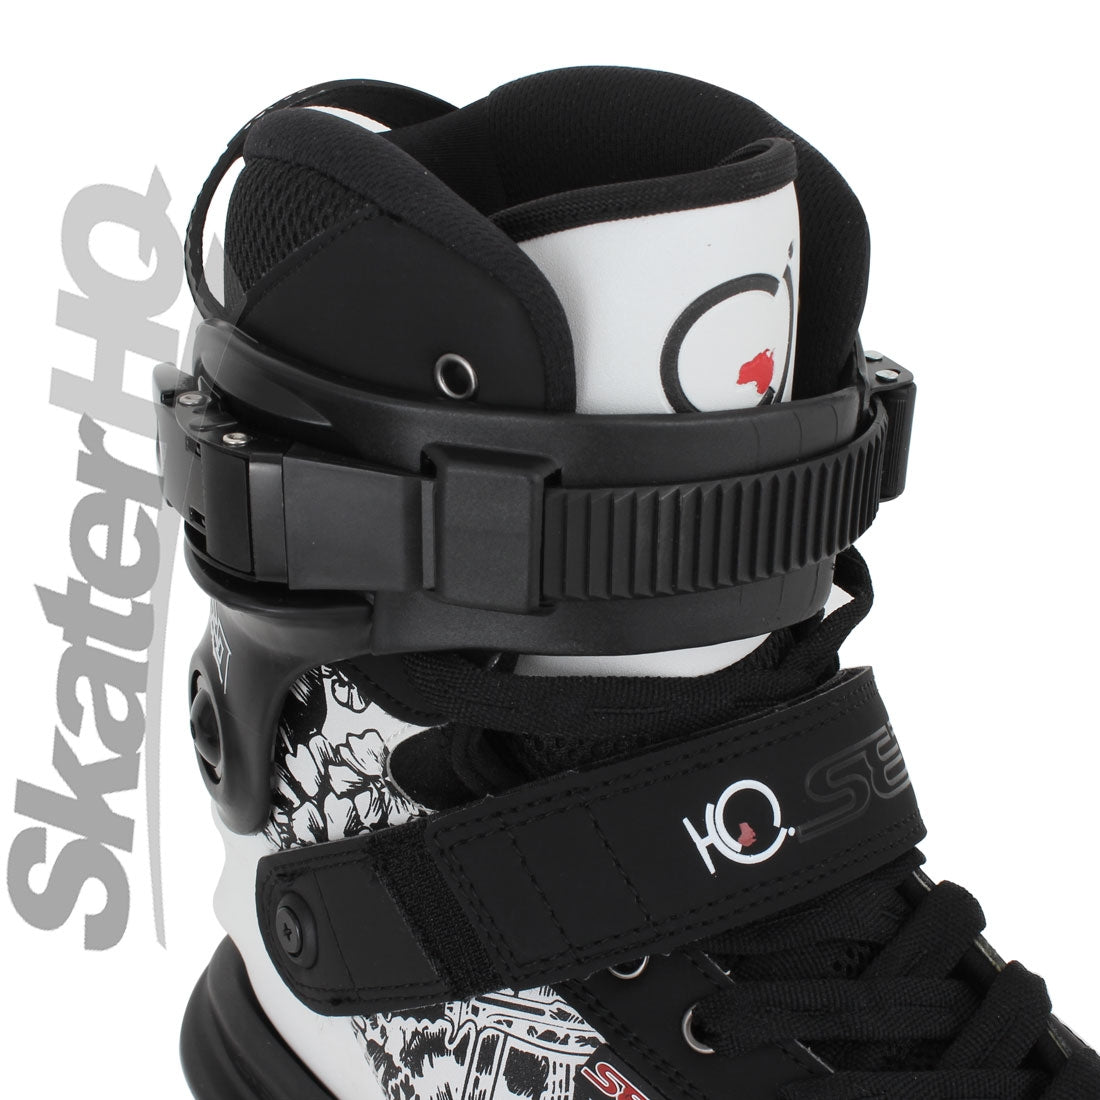 SEBA CJ 2 Pro Skate 10US/EU43 Inline Aggressive Skates